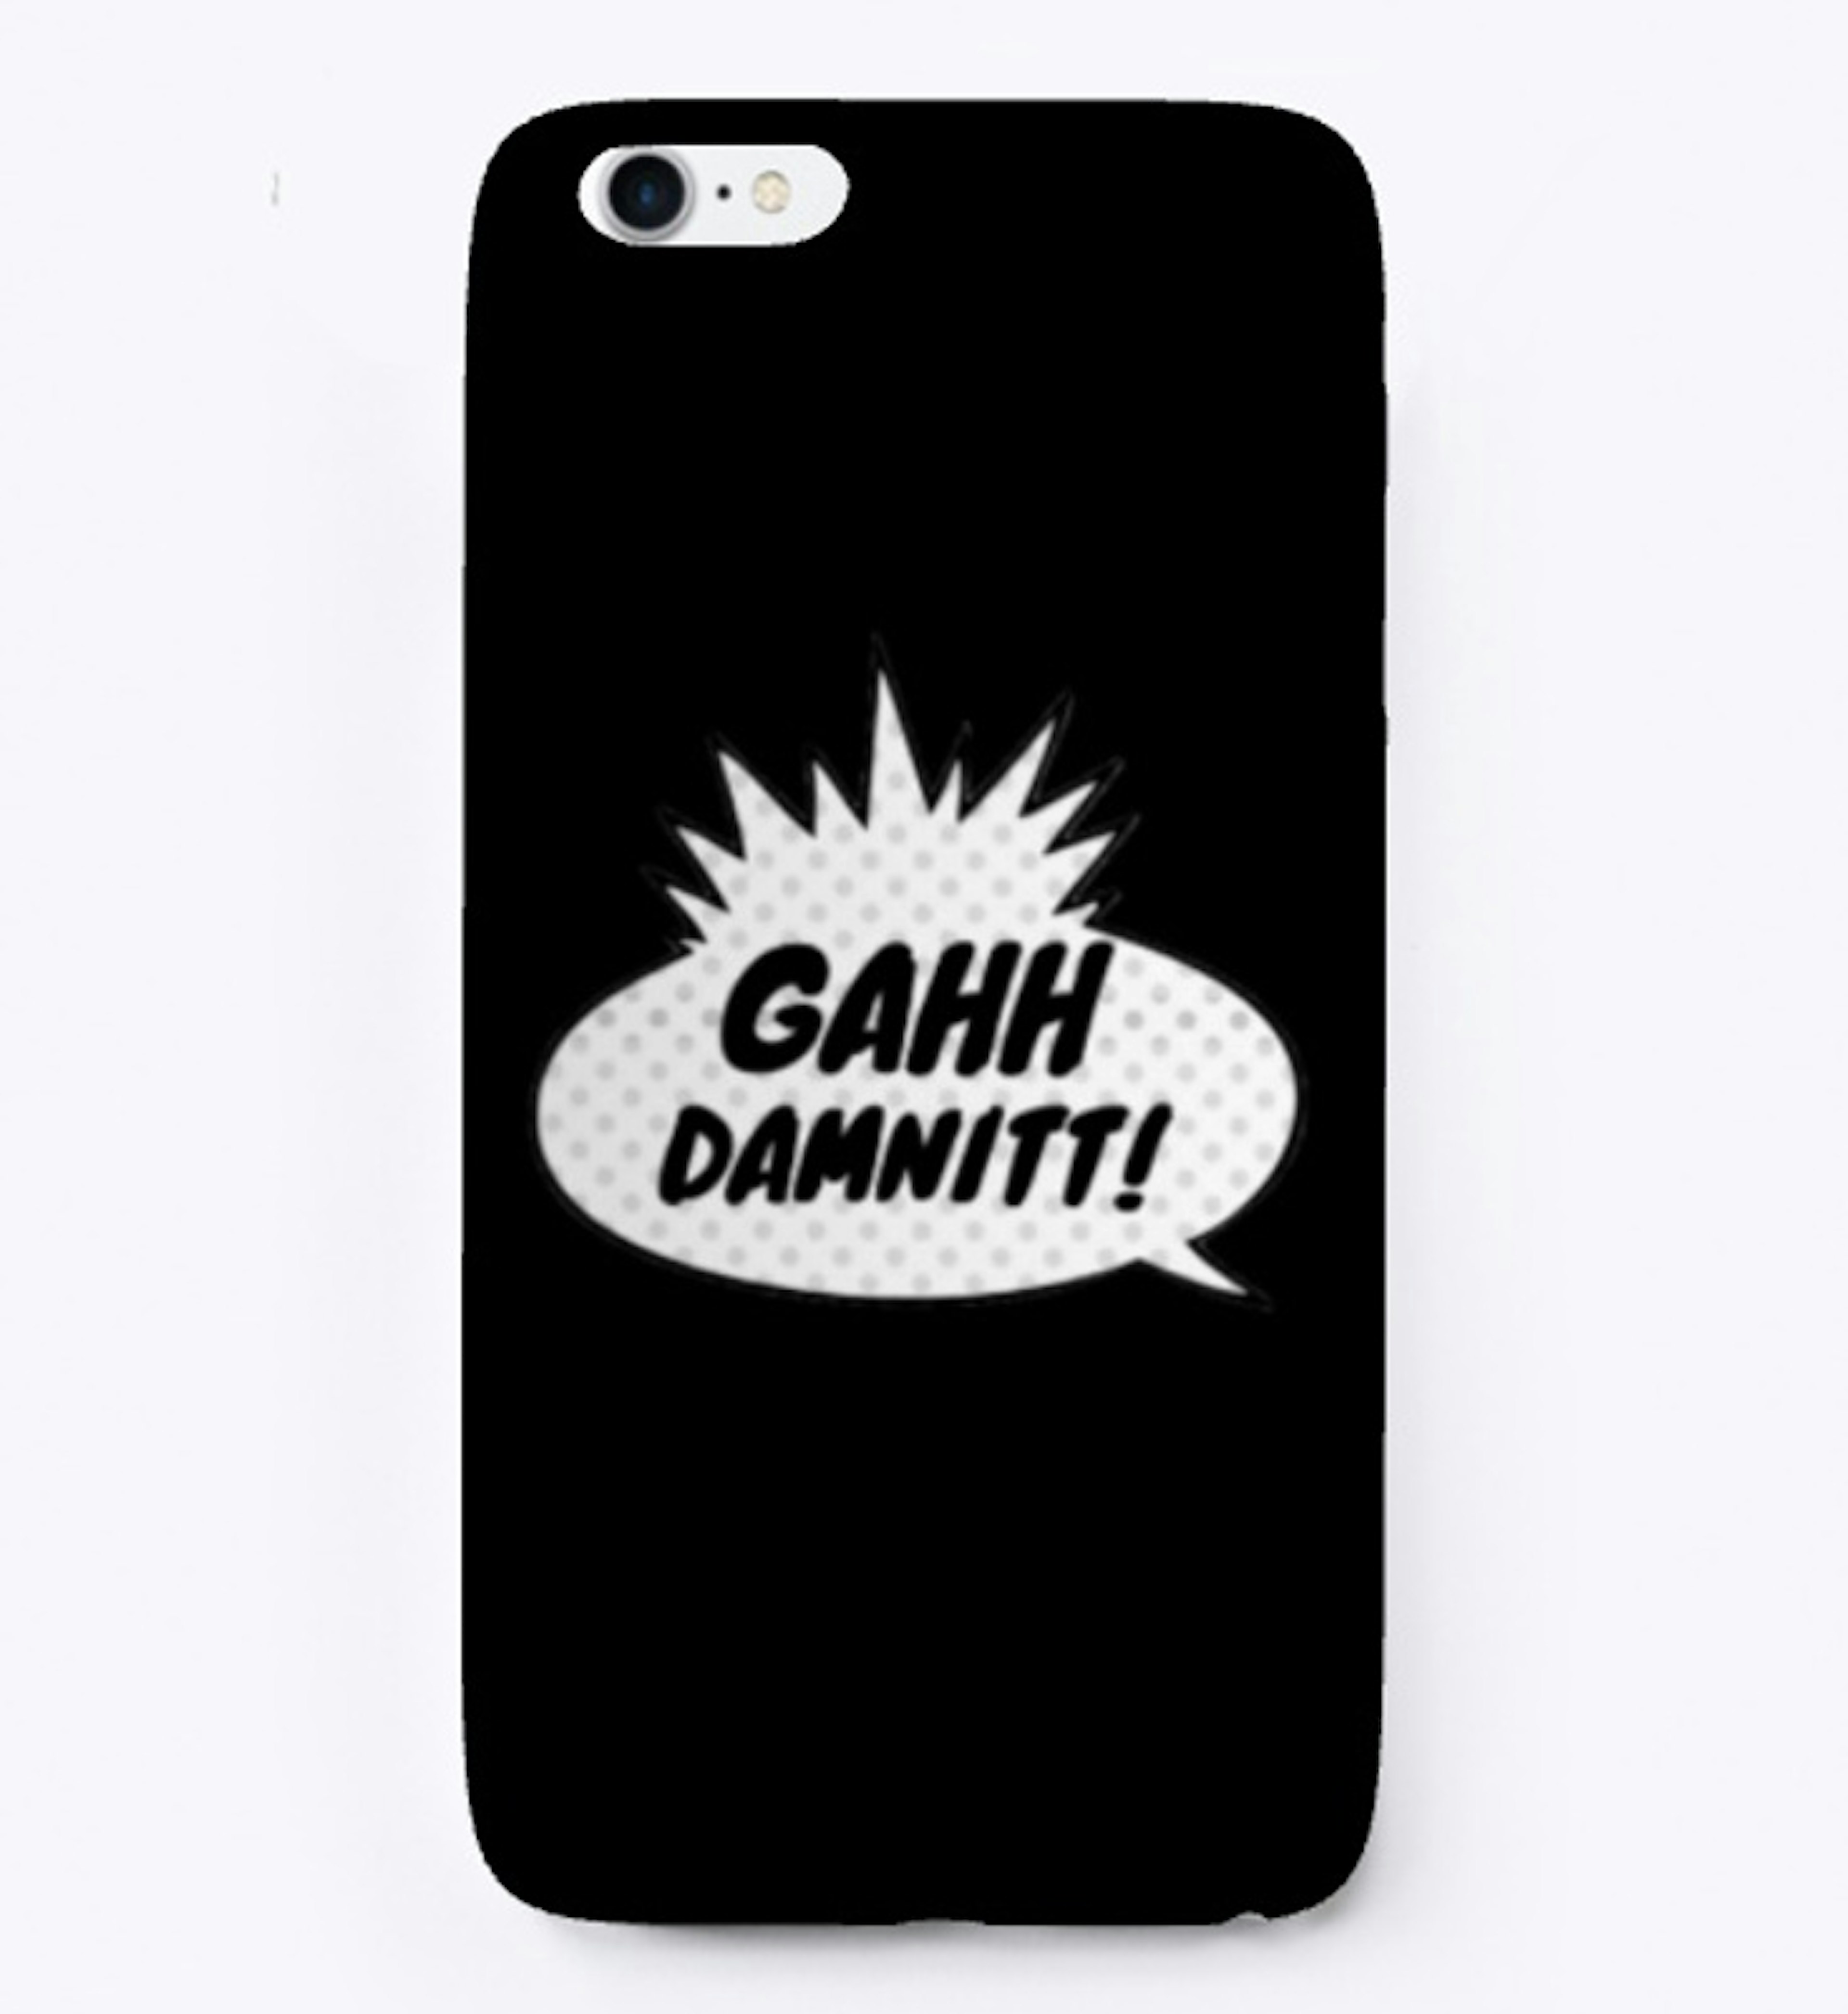 GAHH DAMNITT PHONE CASE